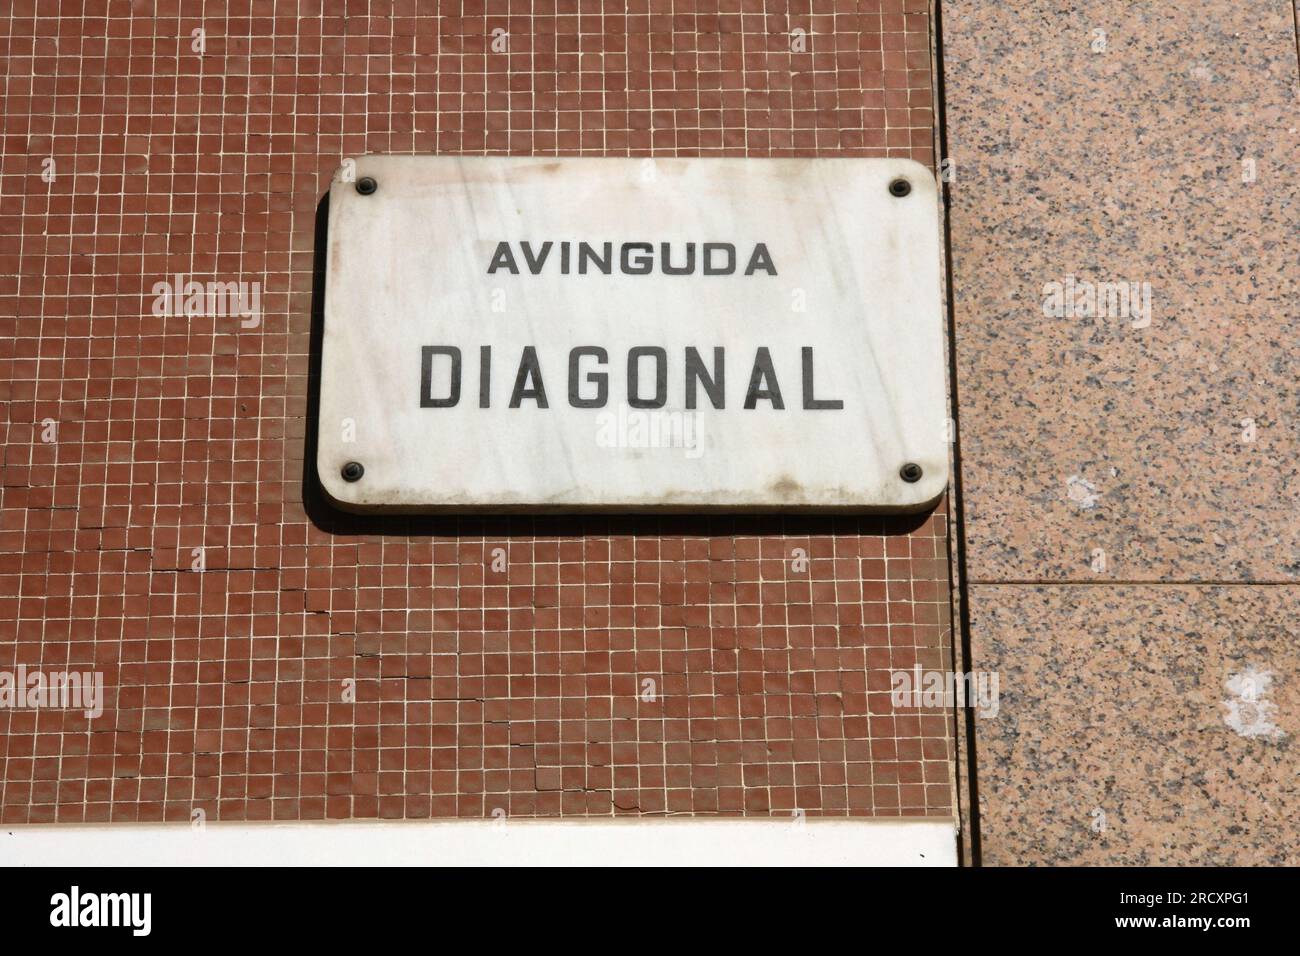 Nom de la rue à Barcelone - Avinguda Diagonal. Rue importante à Barcelone. Banque D'Images